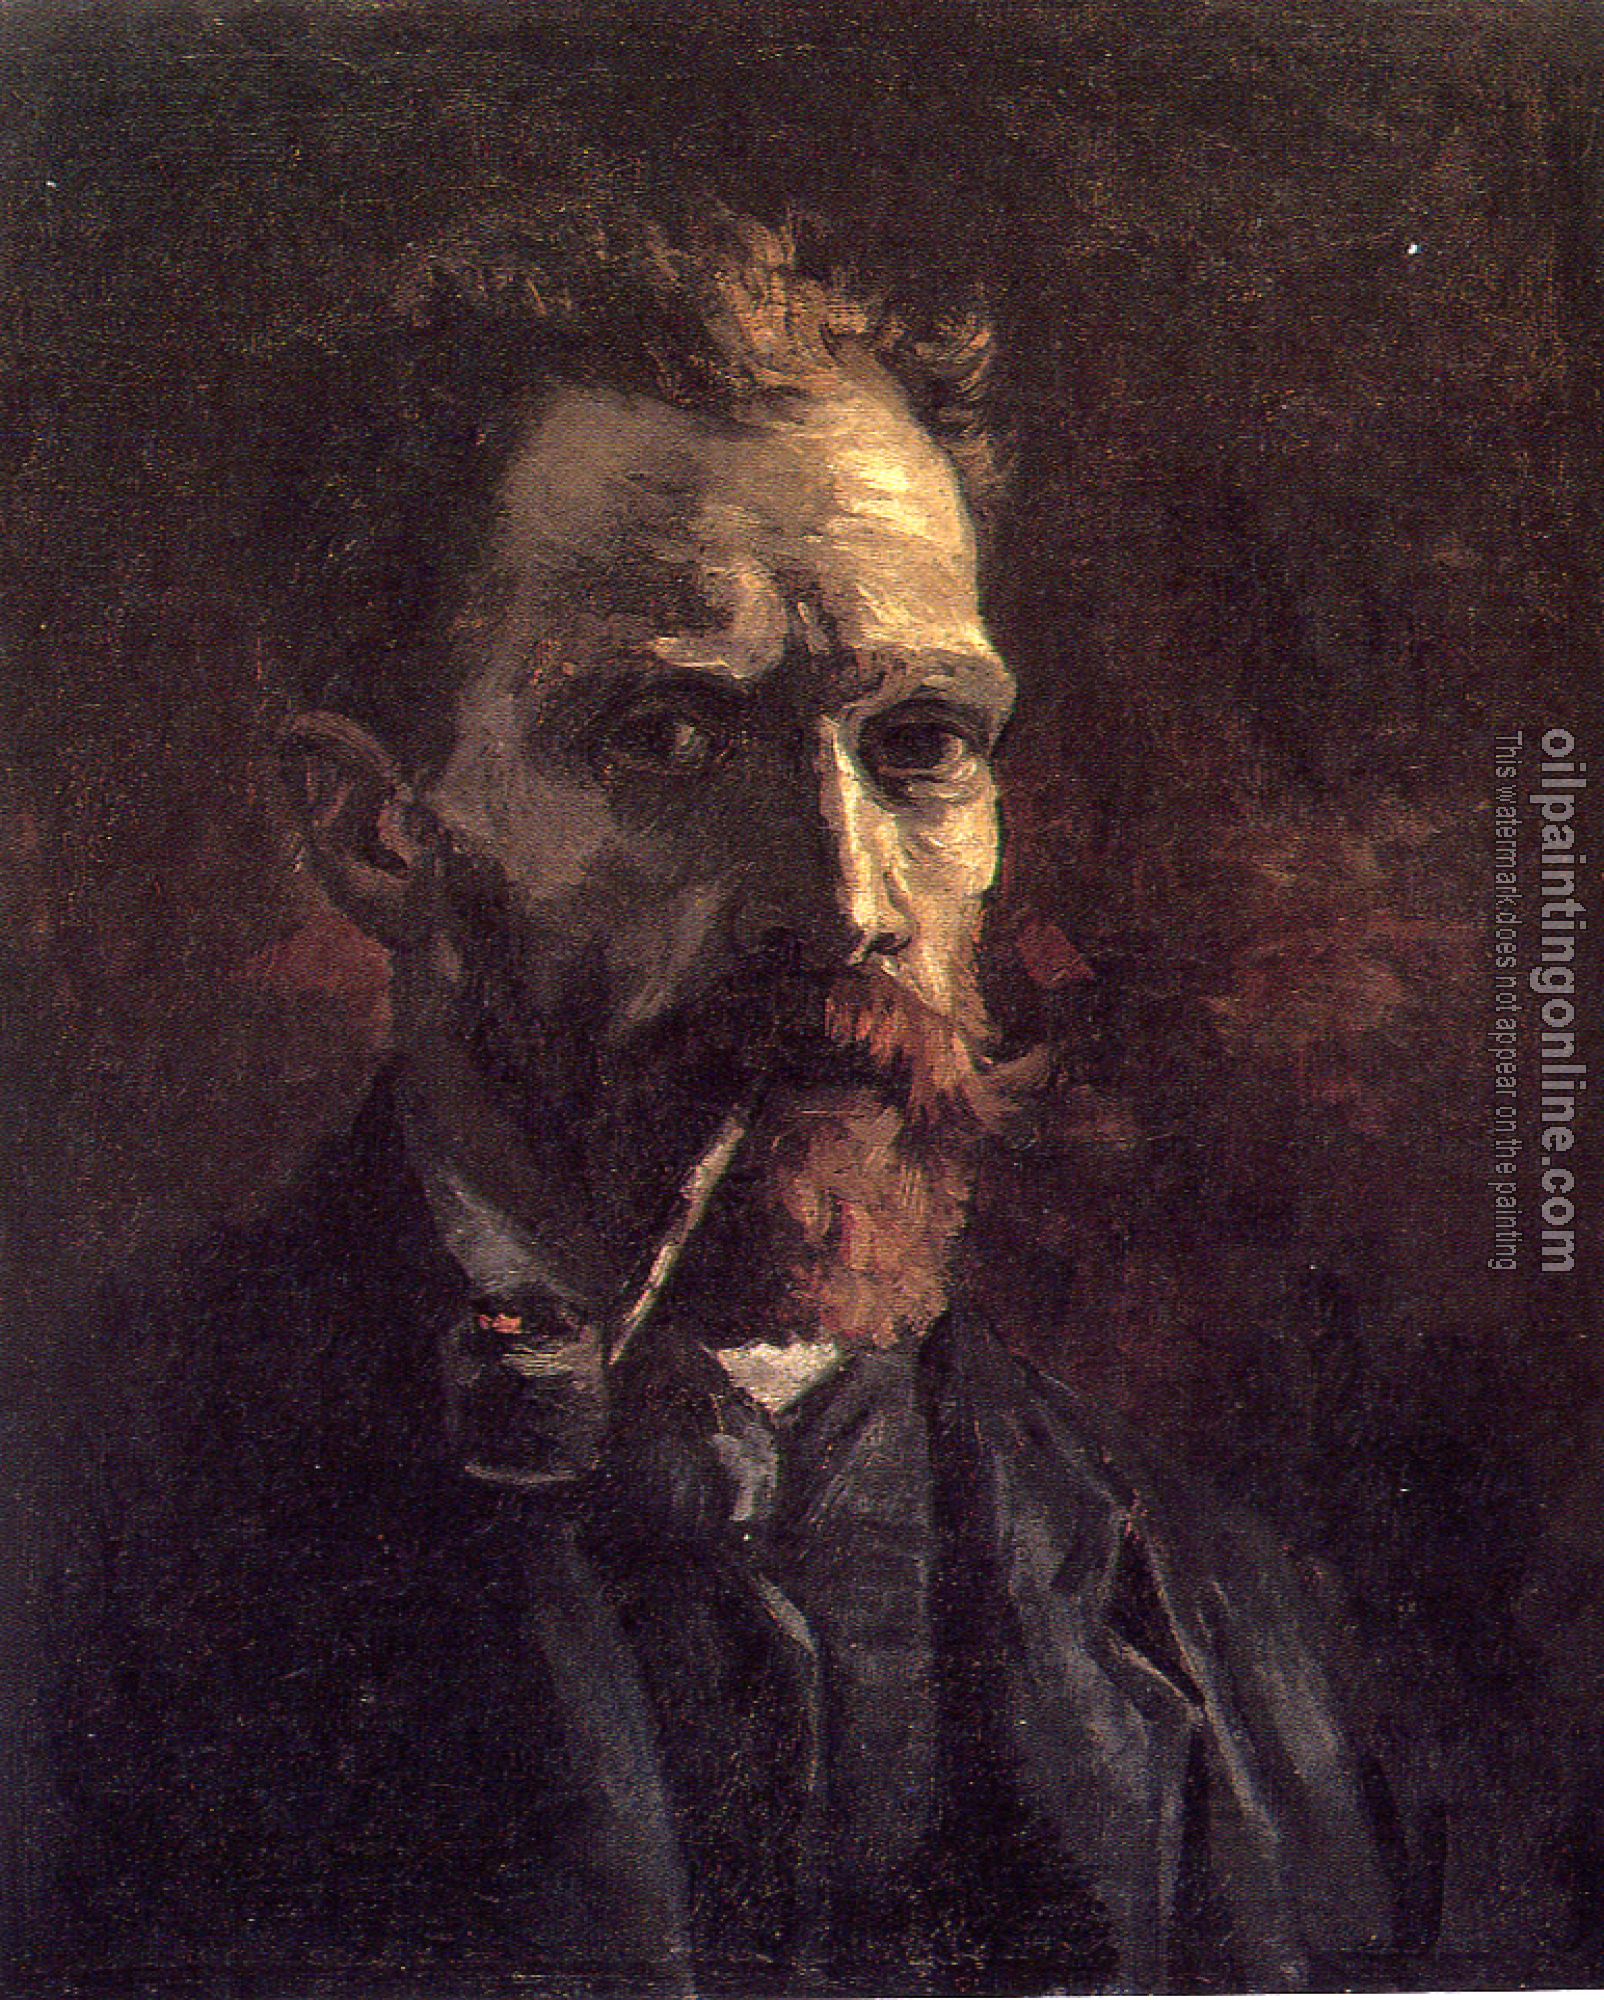 Gogh, Vincent van - Self-Portrait with Pipe